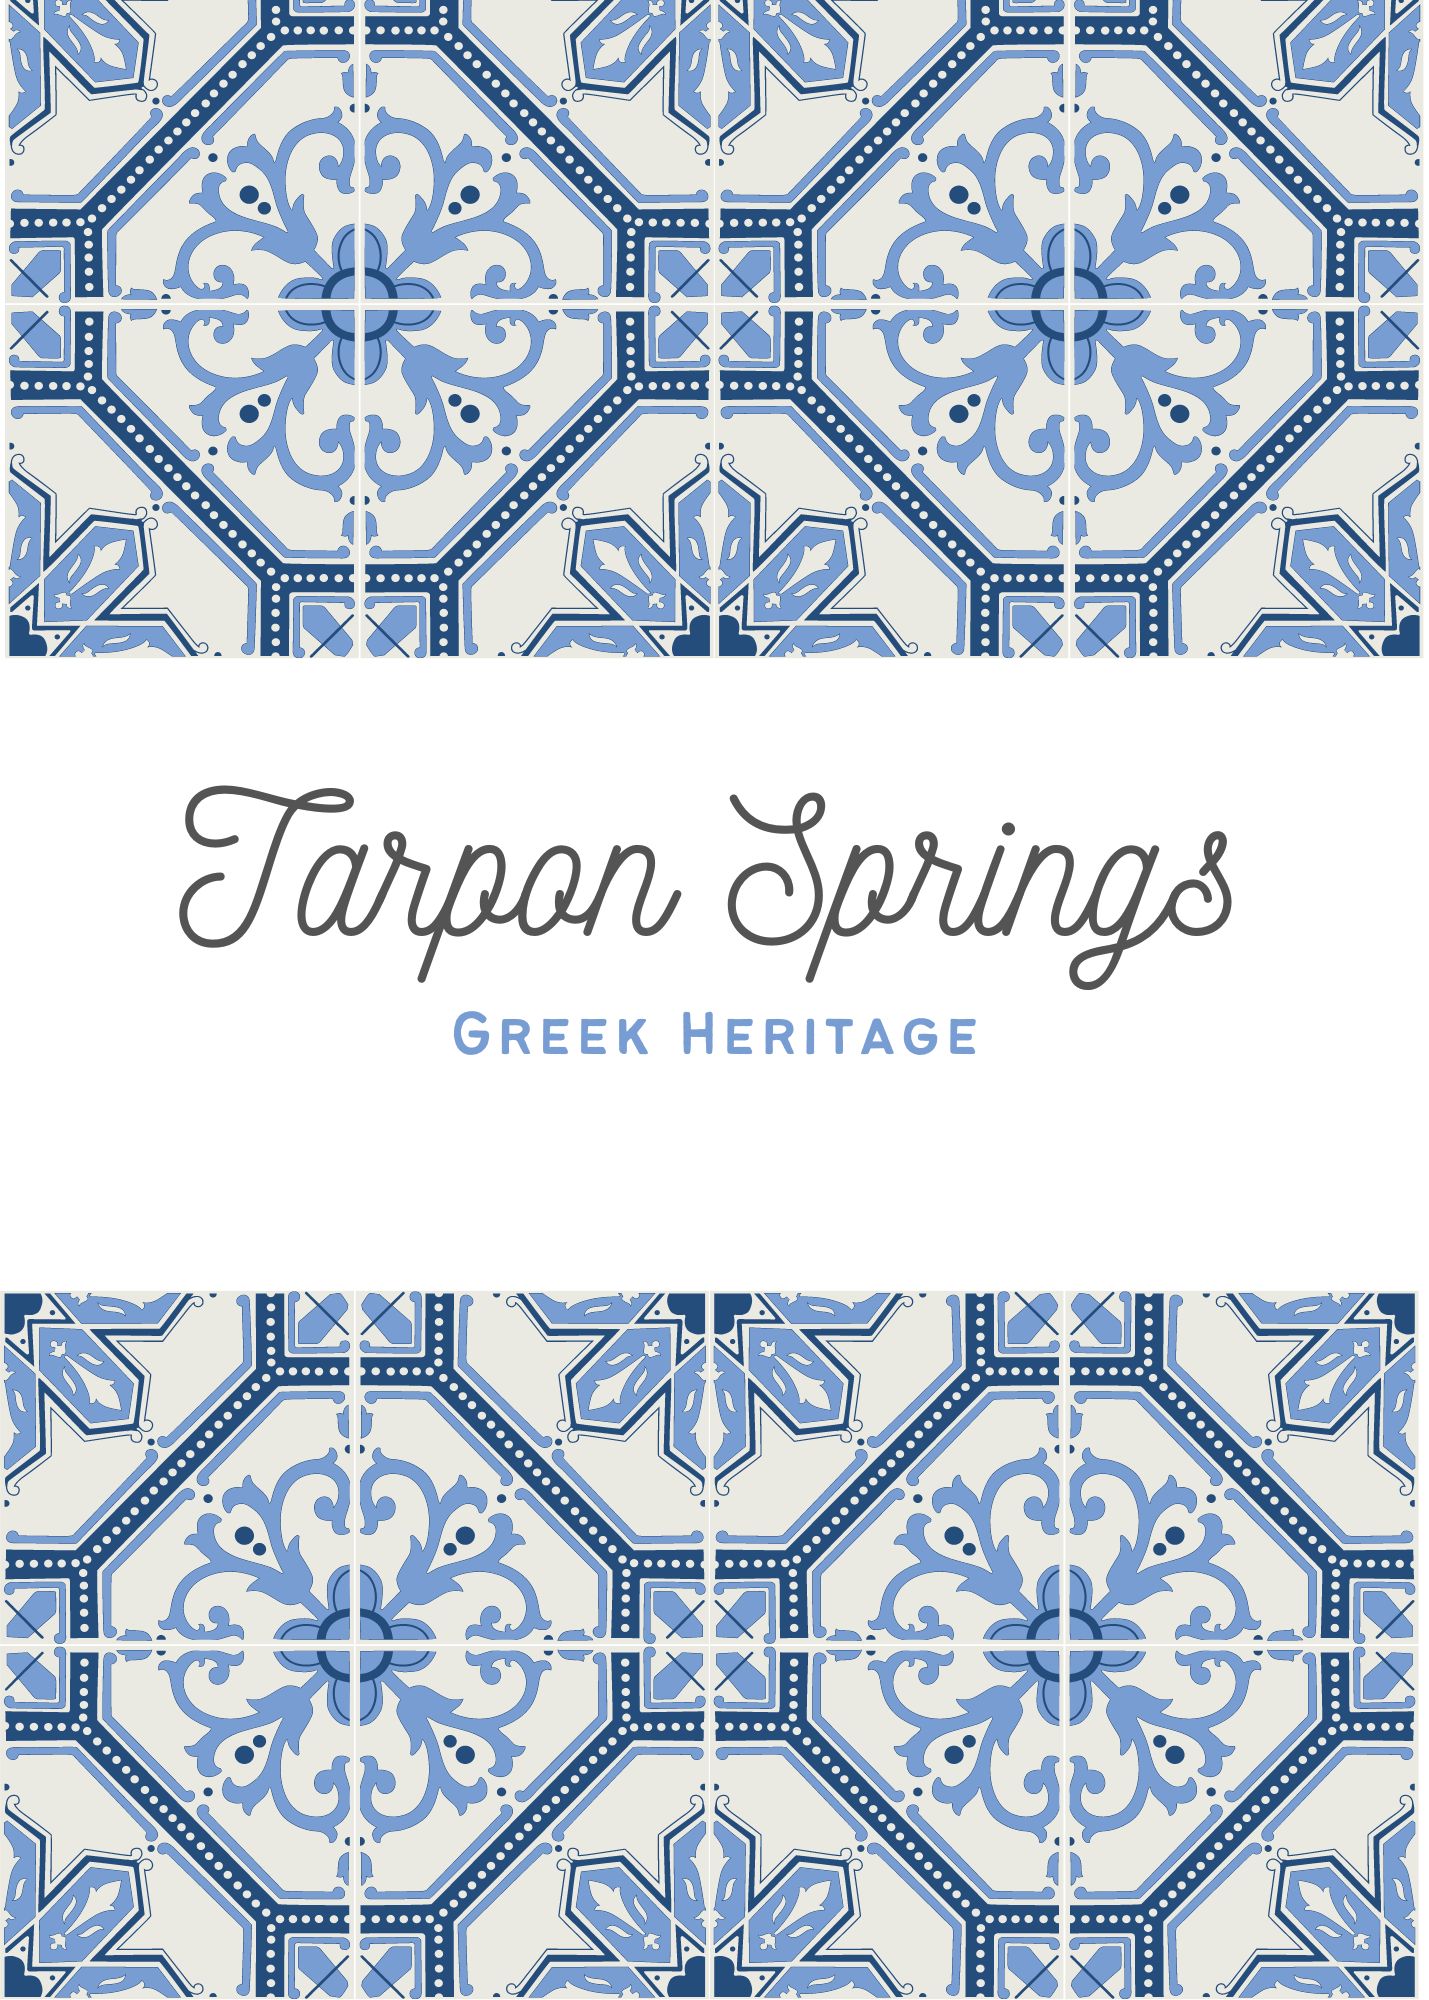 Tarpon Springs Greek Heritage